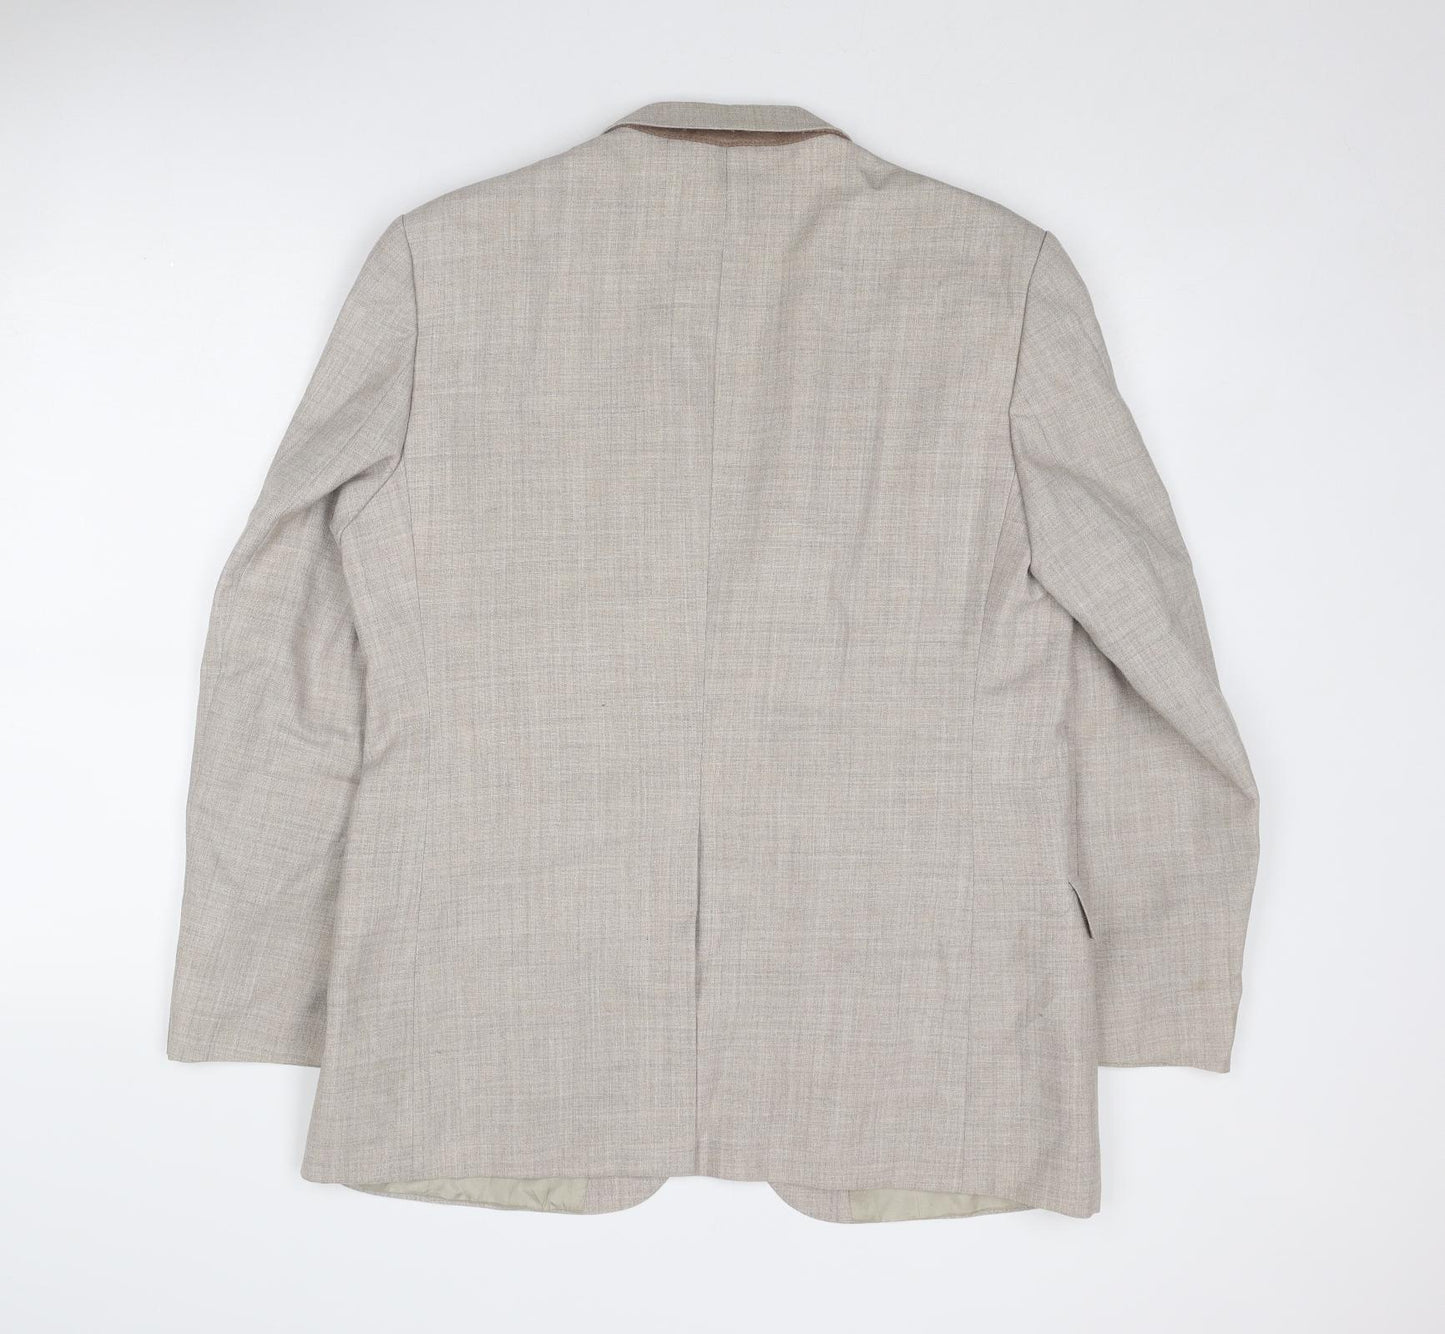 St Michael Mens Beige Polyester Jacket Suit Jacket Size 42 Regular